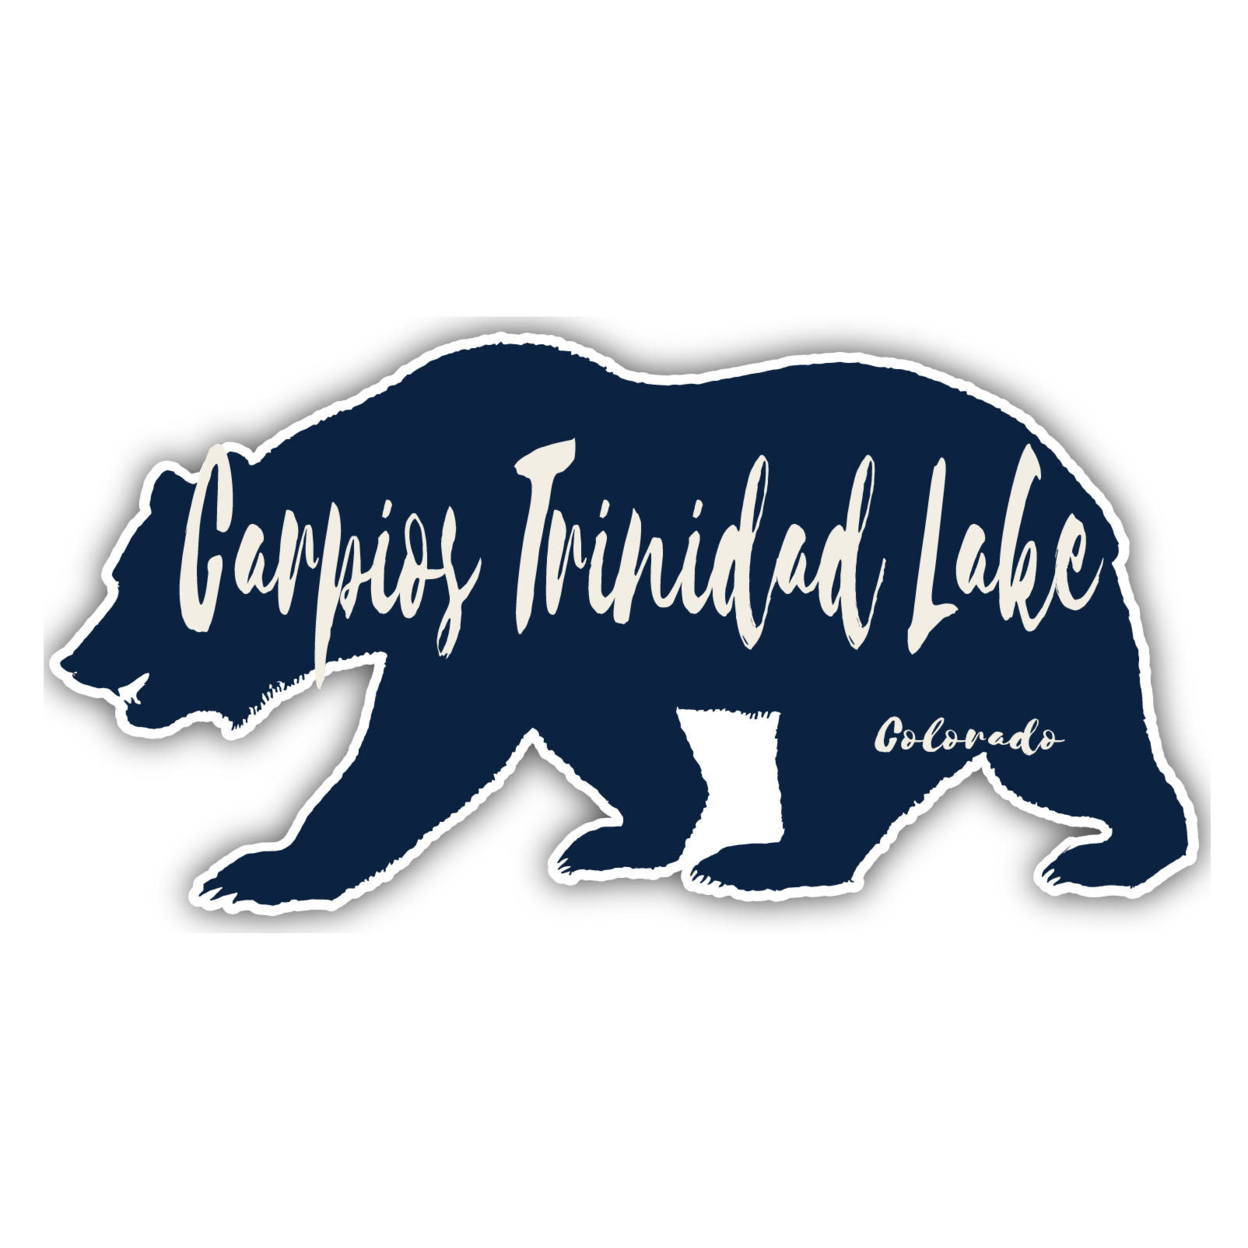 Carpios Trinidad Lake Colorado Souvenir Decorative Stickers (Choose Theme And Size) - Single Unit, 2-Inch, Bear